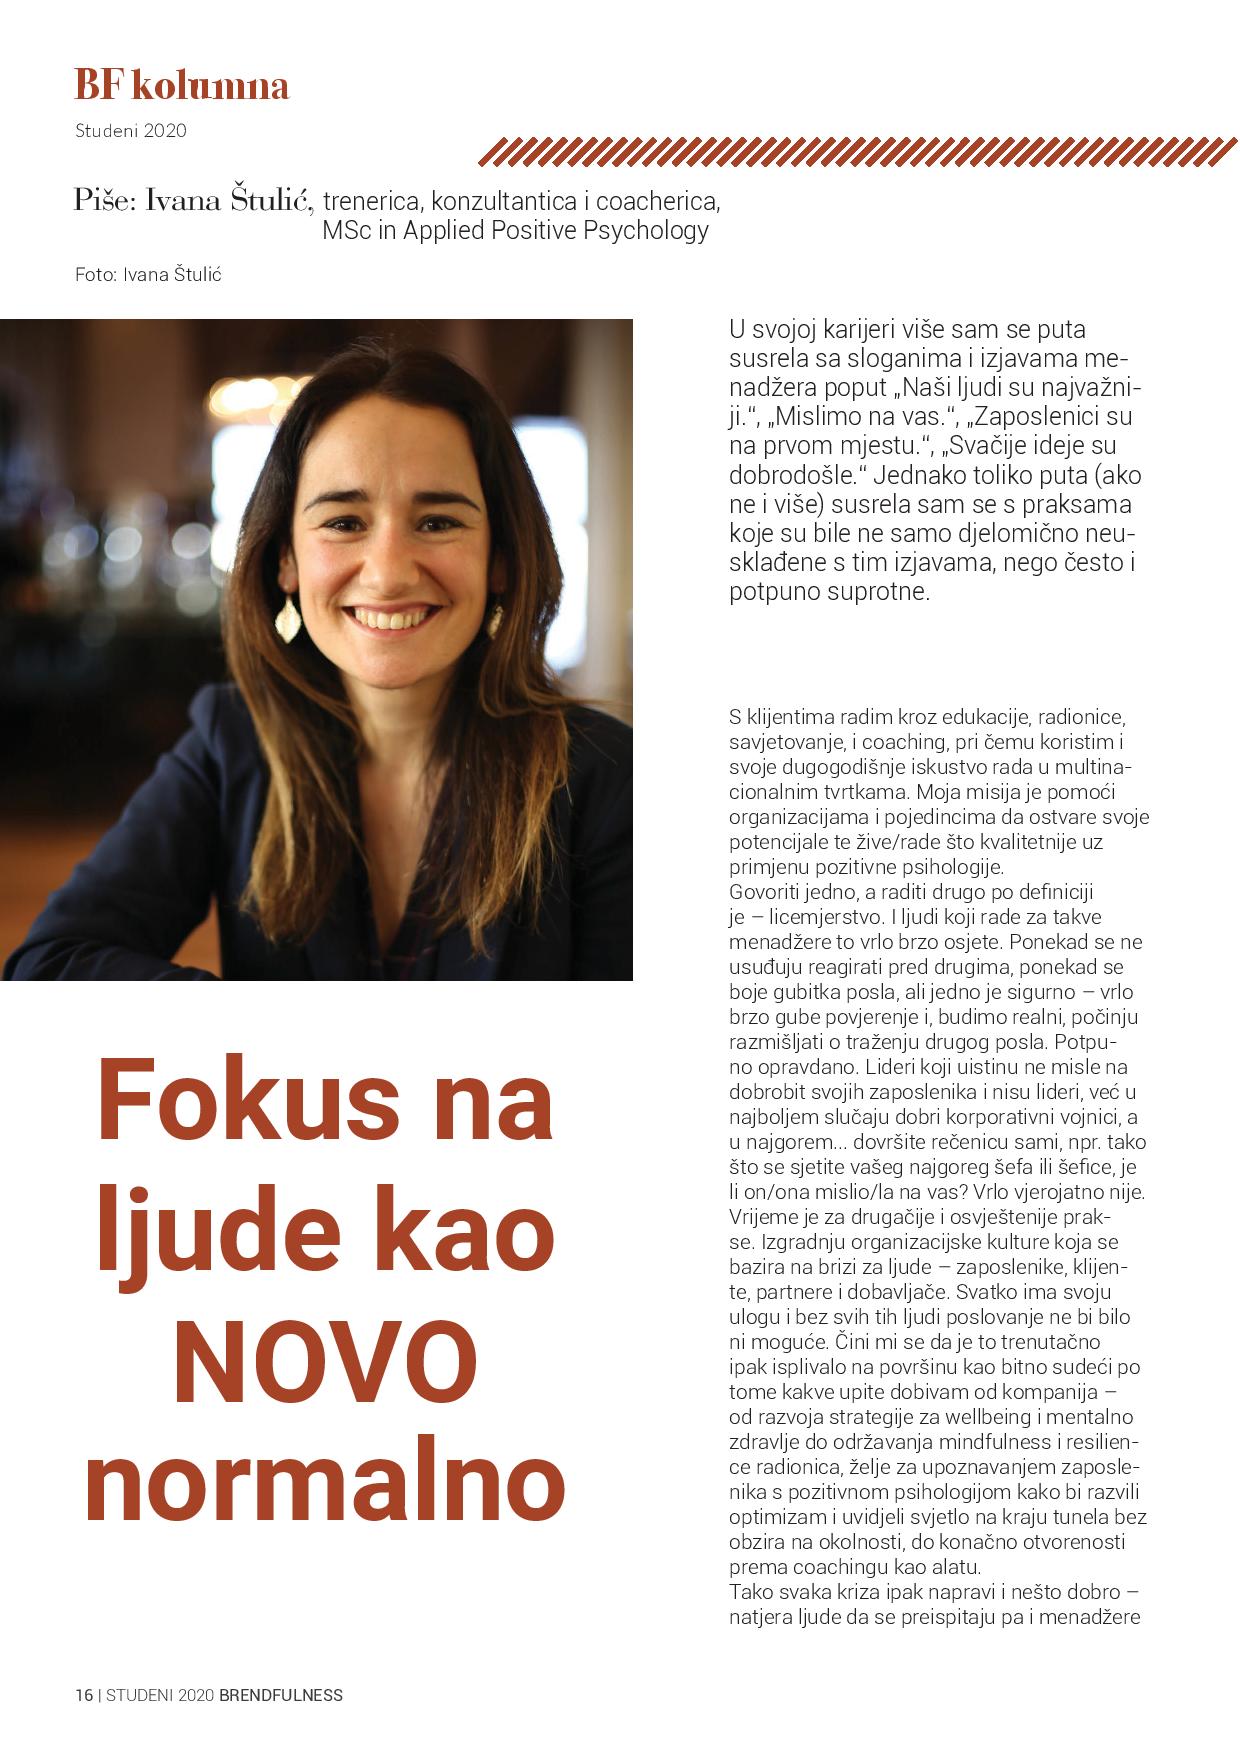 Ivana Štulić | Positive Psychology, Coaching, Training, Consulting